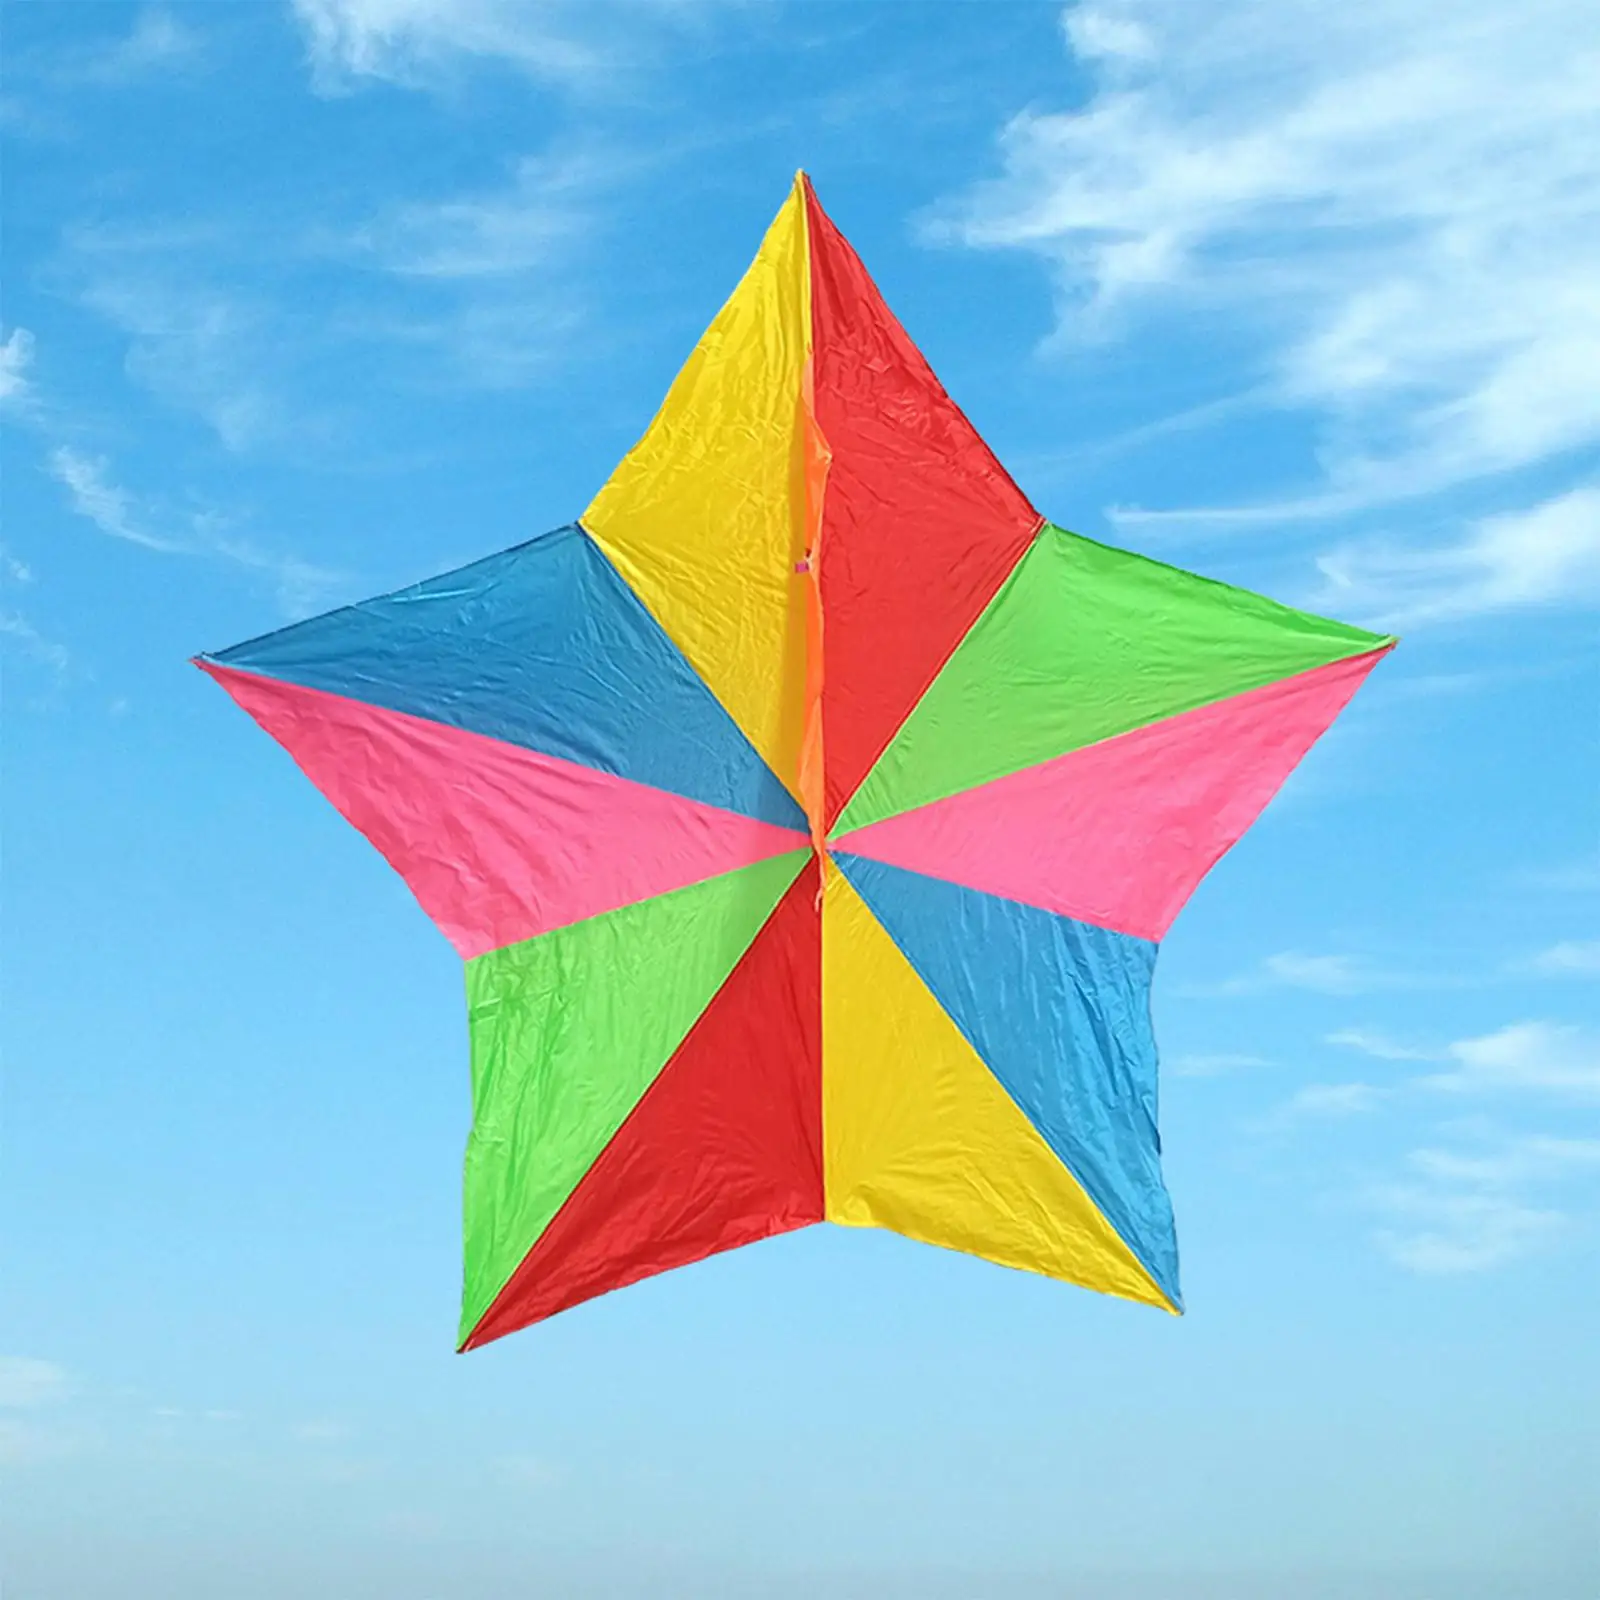 Outdoor Five Pointed Star Kite Cute Enjoy Parent Child Time Beach Toys Line Kite for Travel Garden Adults Children Beginner